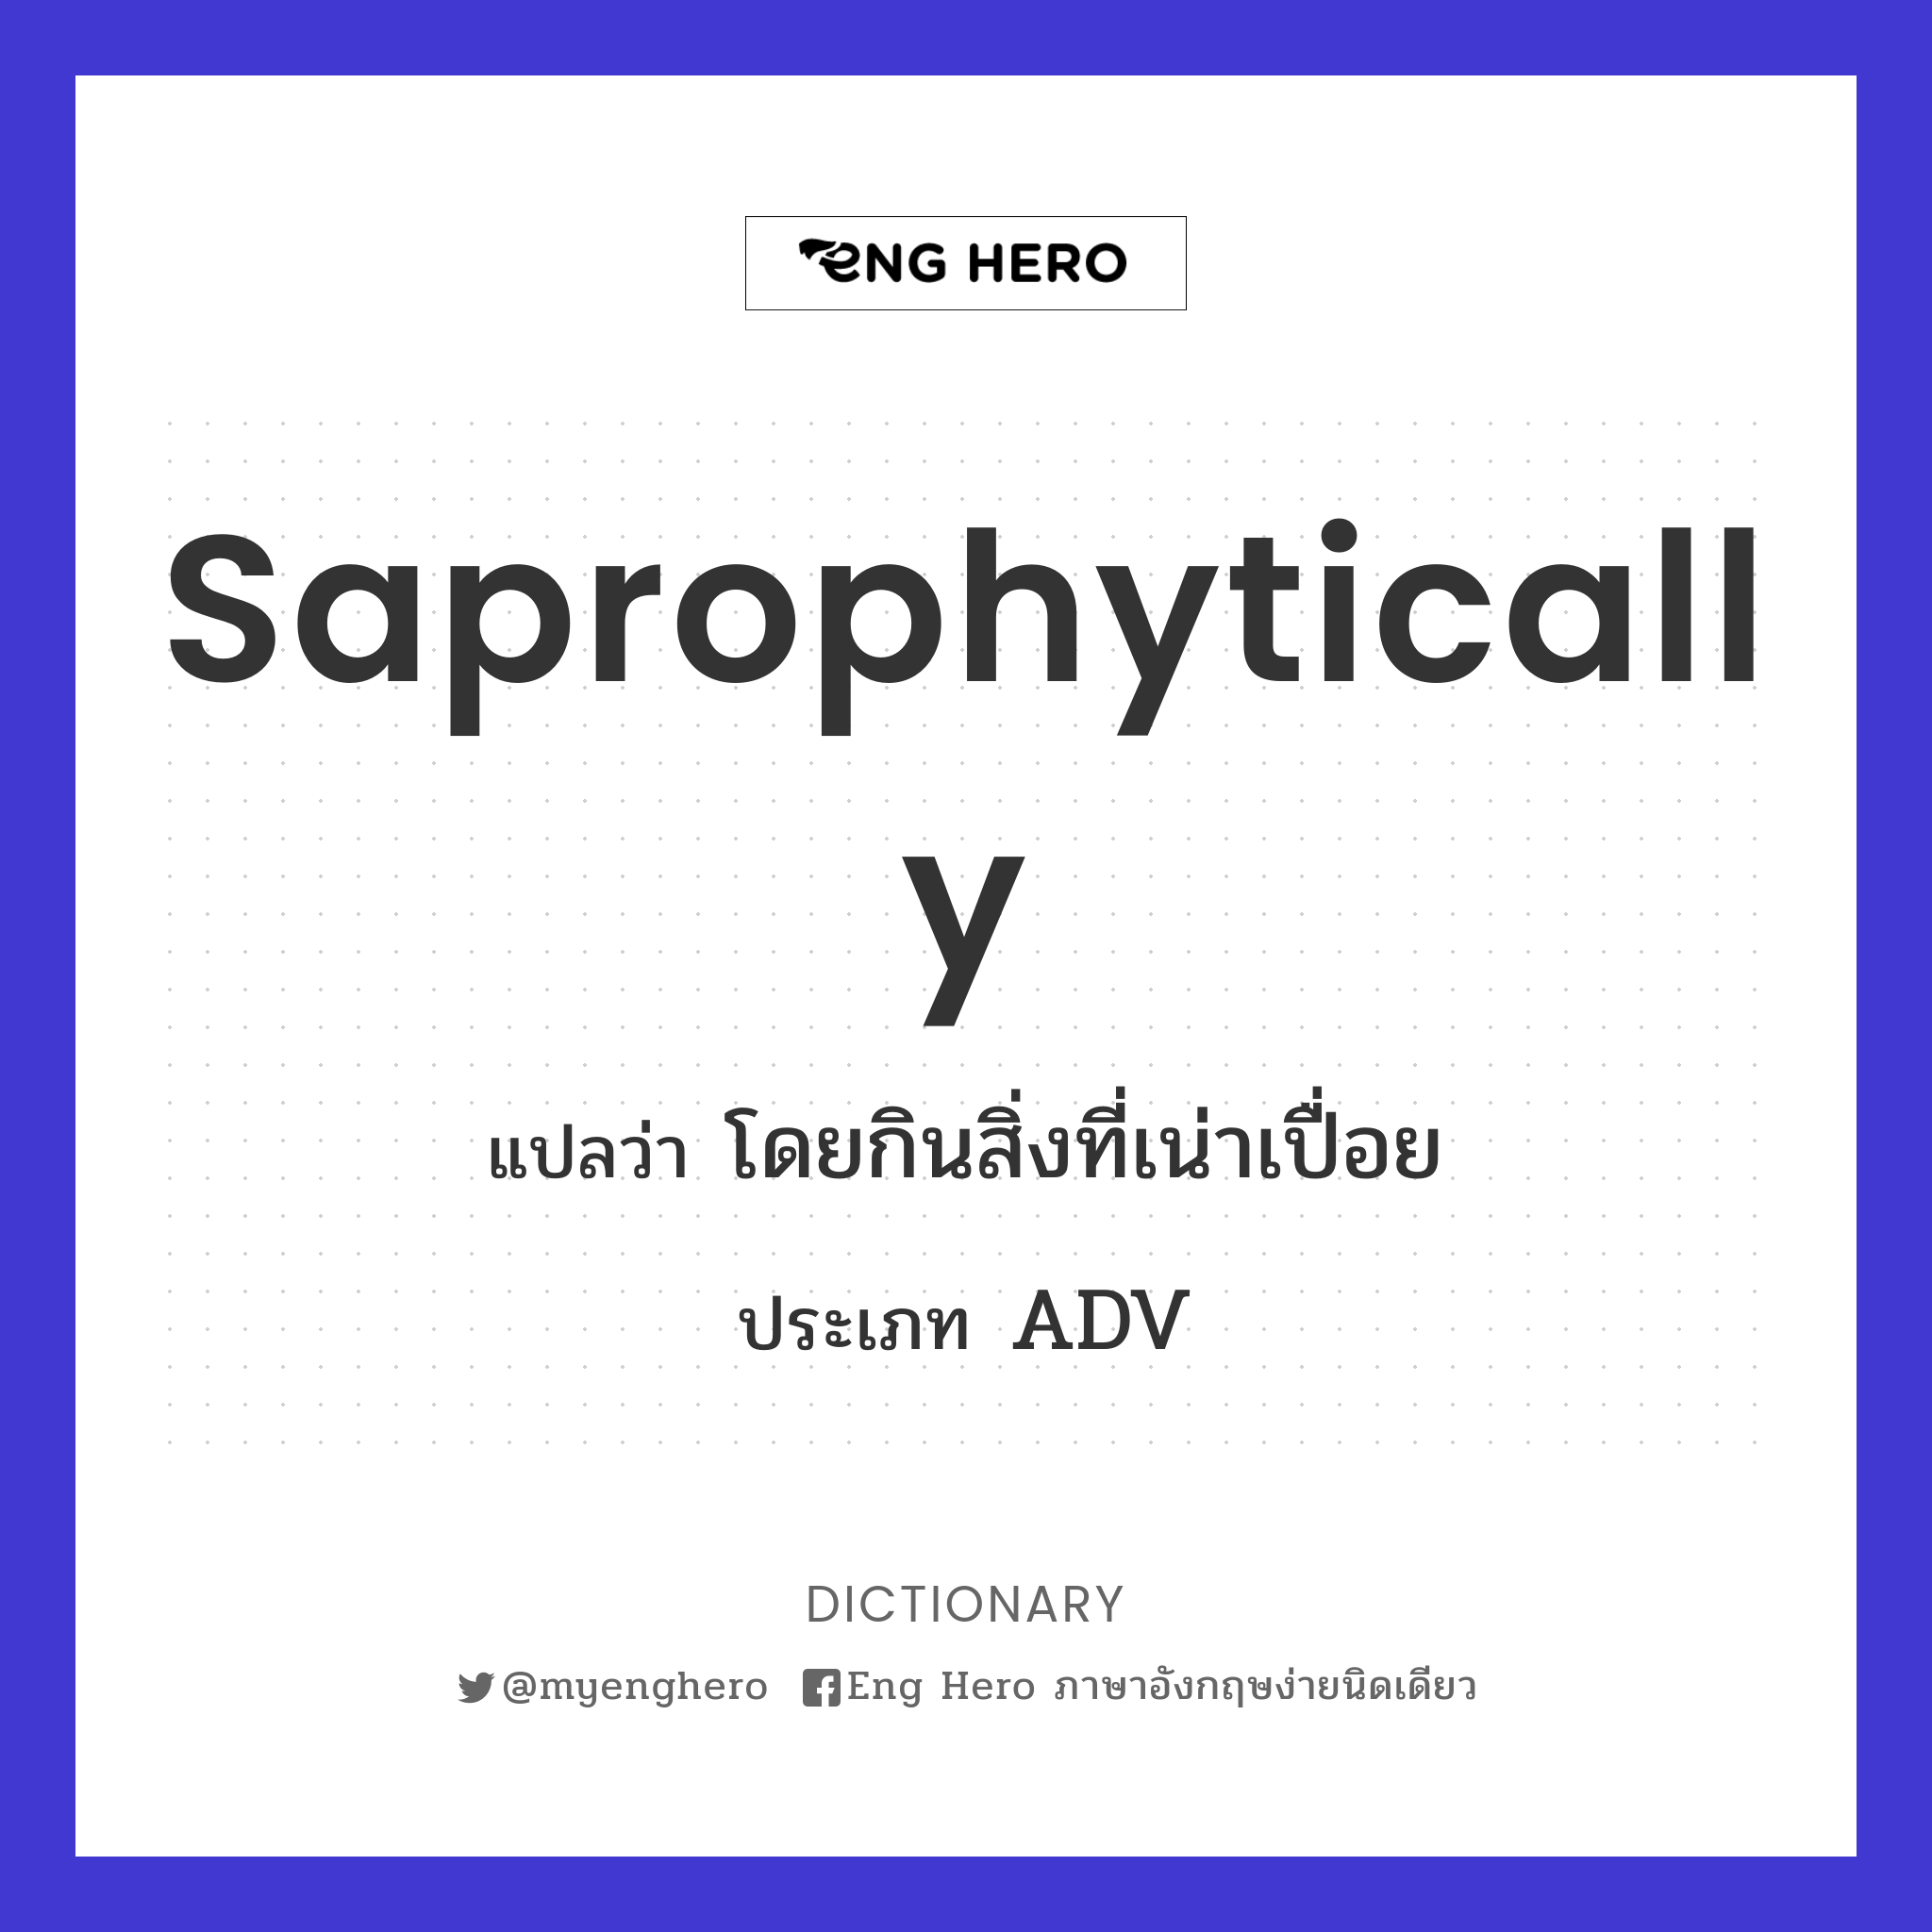 saprophytically